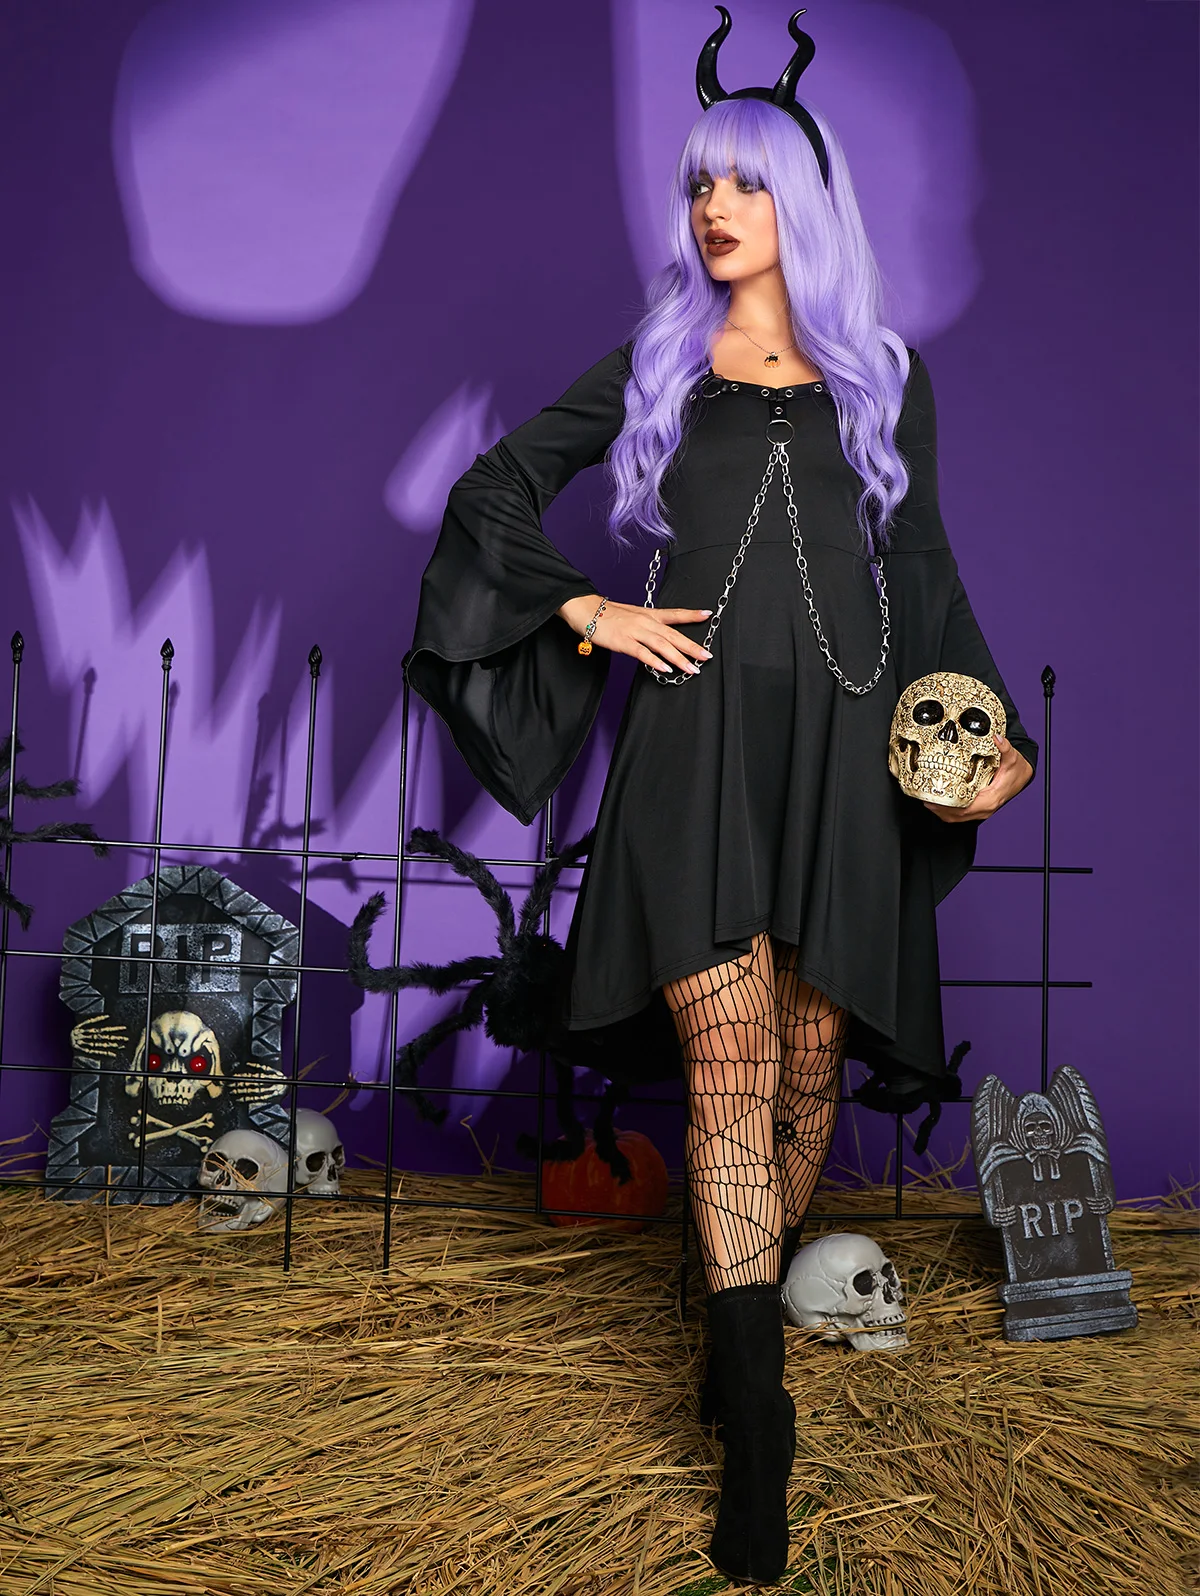 

Dressfo Halloween Costume Flare Sleeve Sling Chain Detail High Low Dress New Evening Dresses